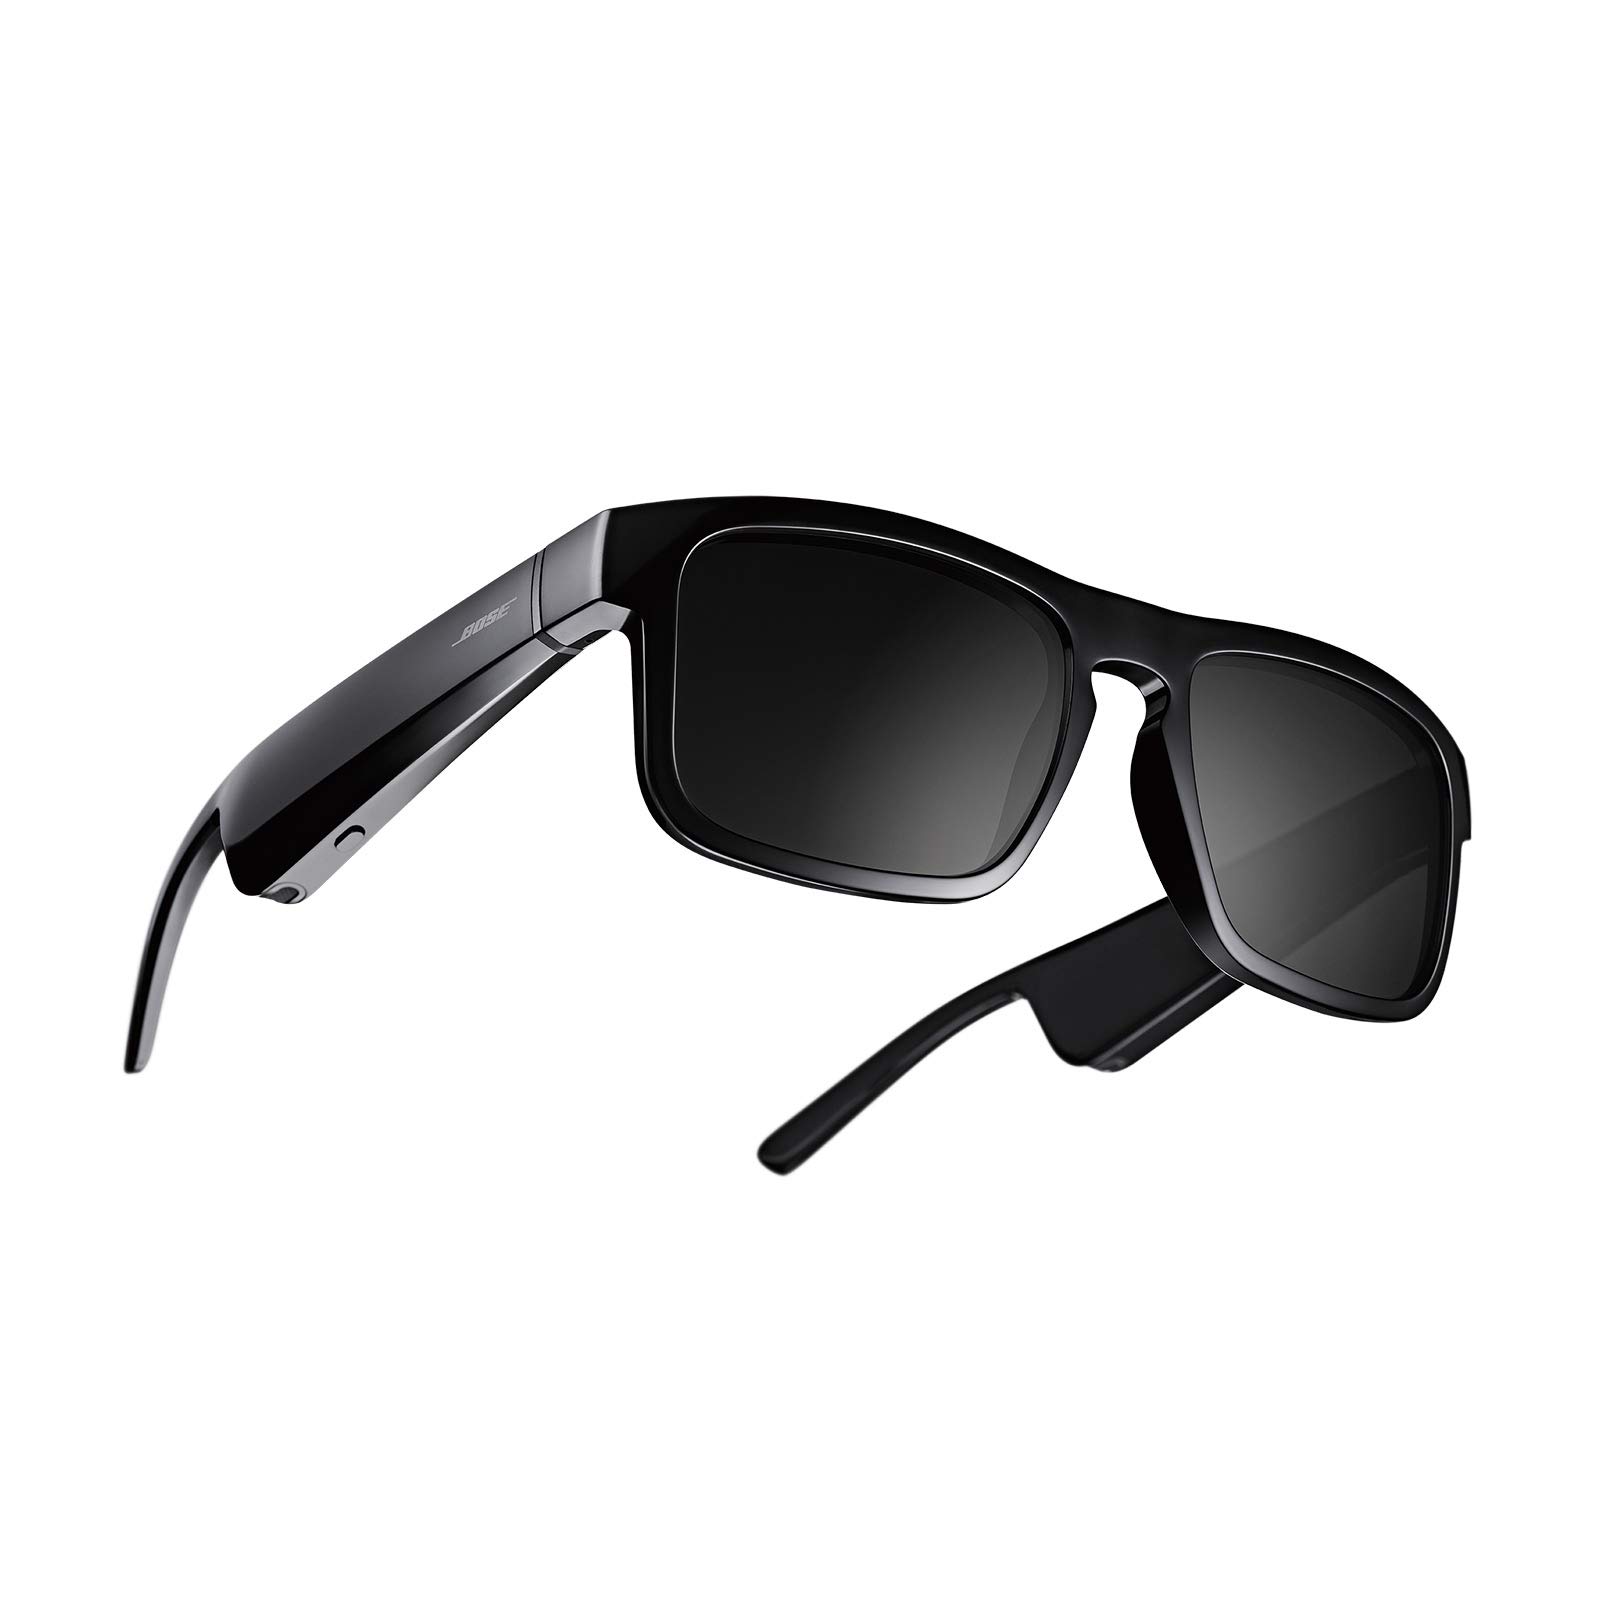 BOSE Frames Tenor、スマートグラス、Bluetooth オーディオサングラス、オープンイヤーヘッドフォン付き、長方形、ブラック